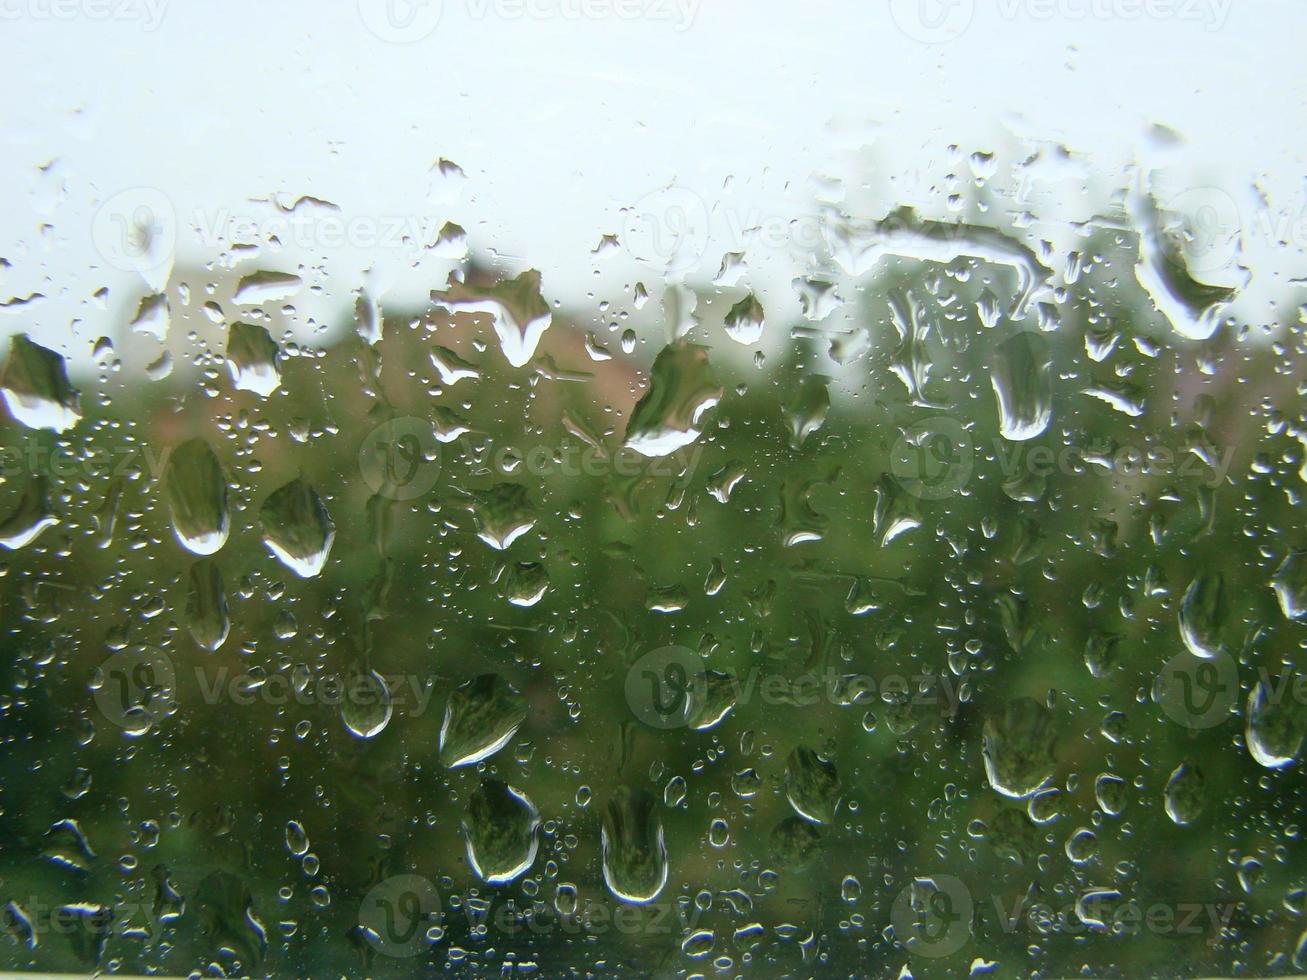 rainy days rain drops on the window surface photo